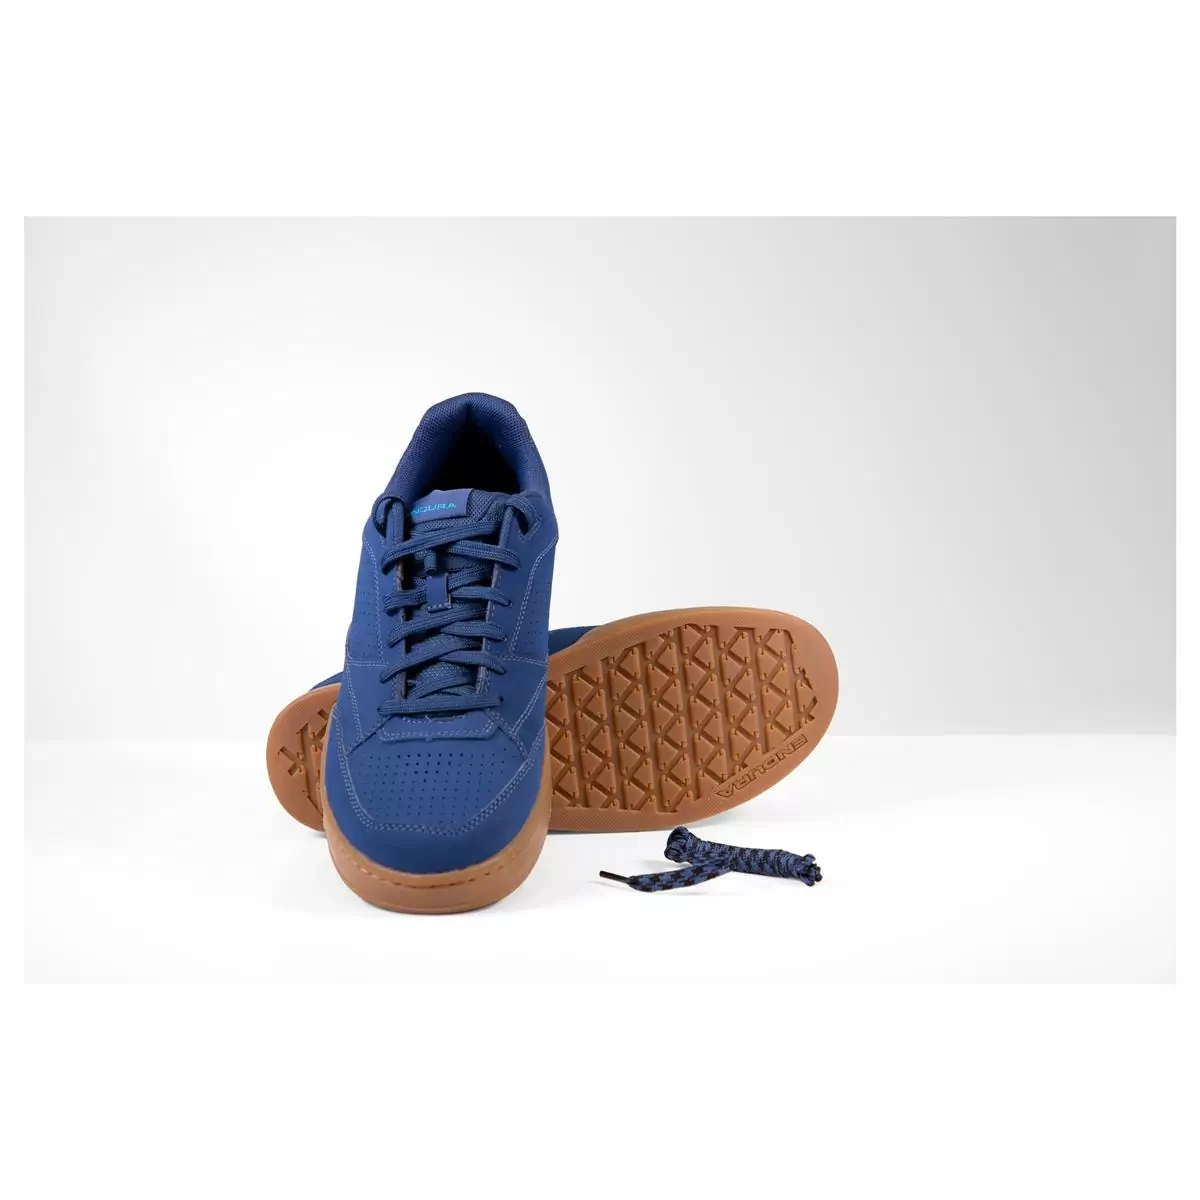 Hummvee Flat Pedal Shoes Blue Size 43 #3